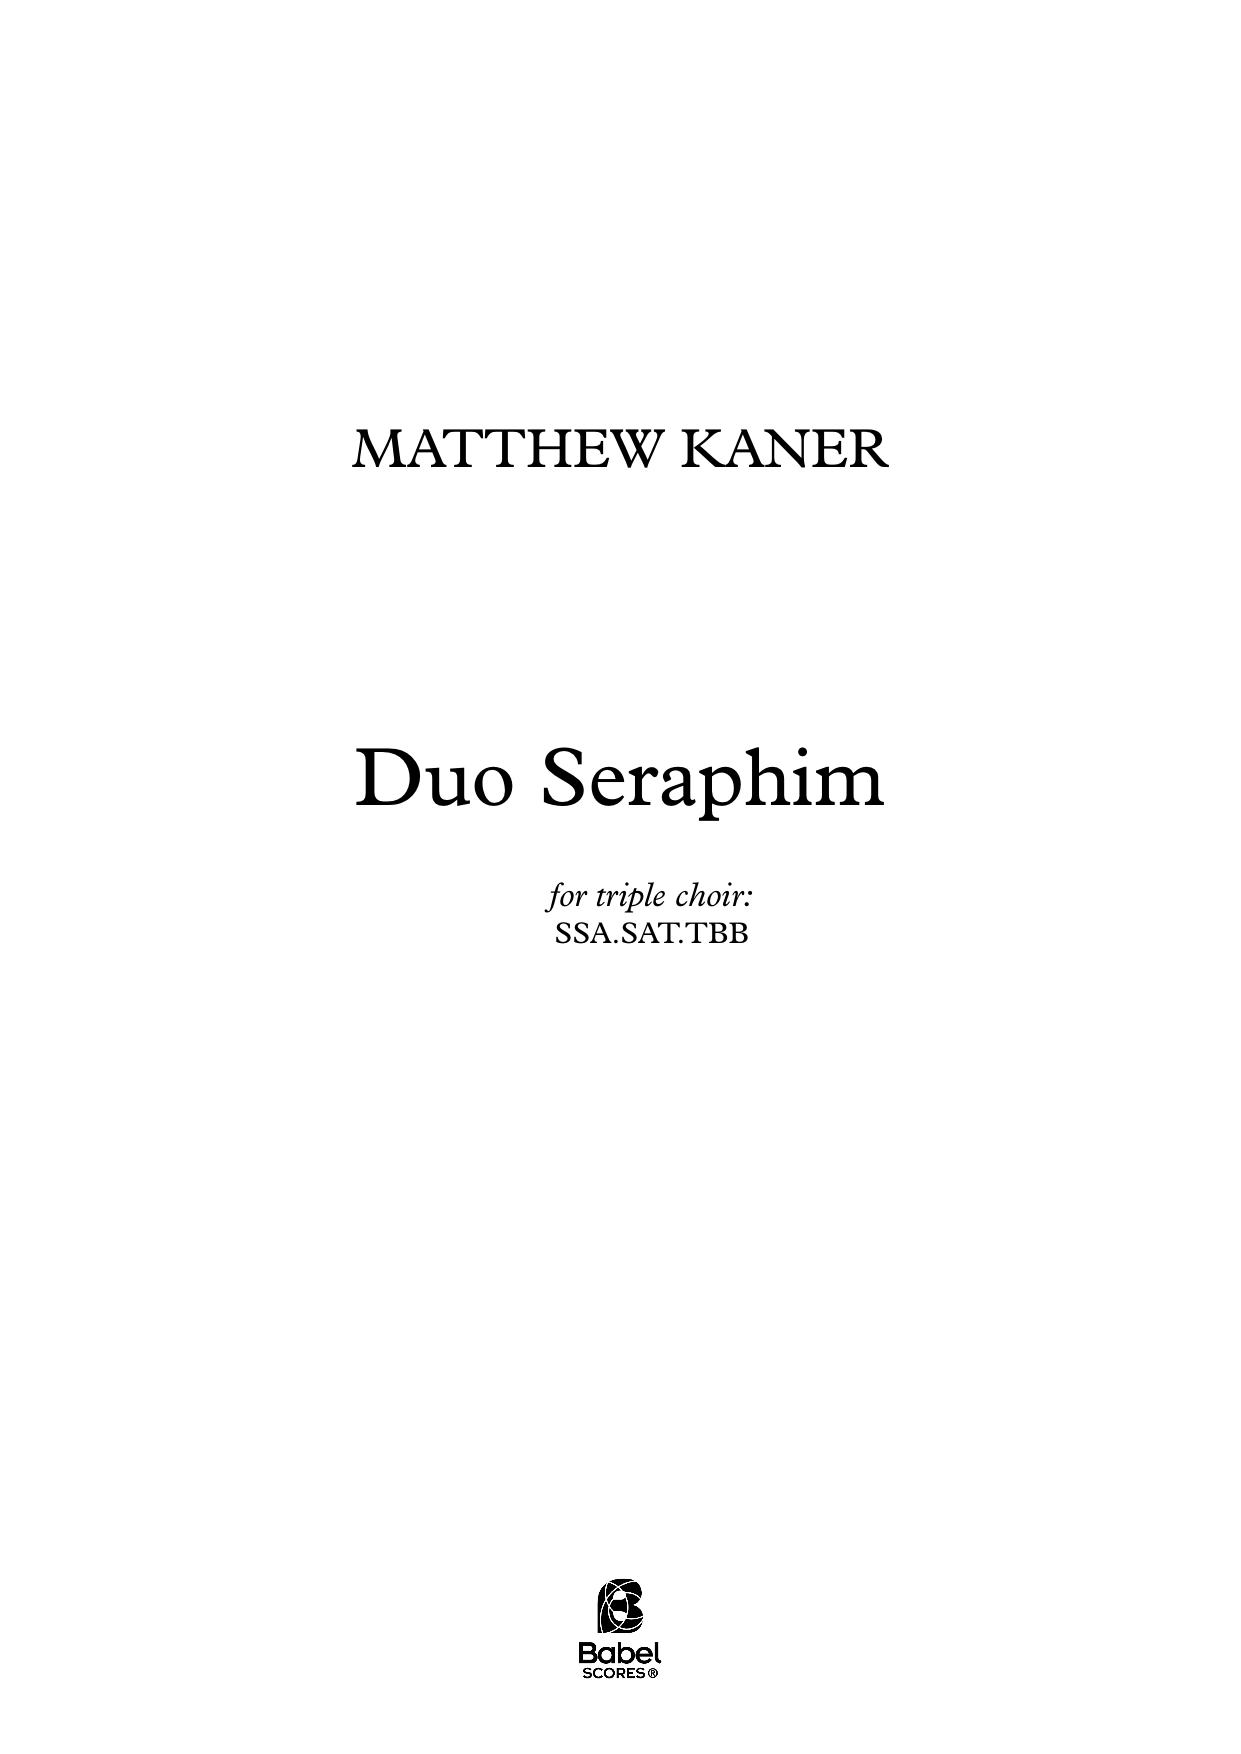 Duo Seraphim A4 z 2 1 67